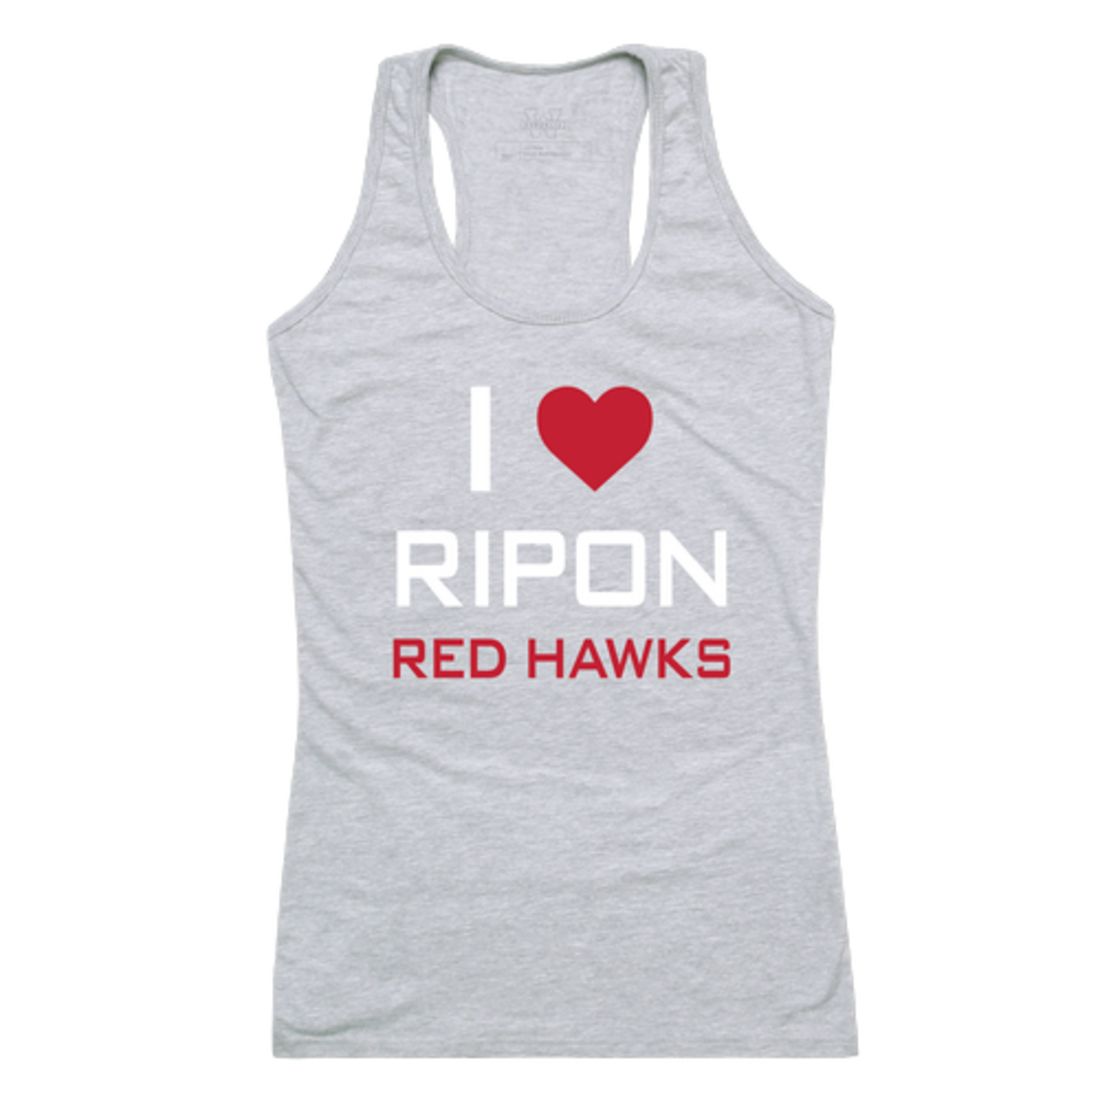 I Love Ripon College Red Hawks Womens Tank Top